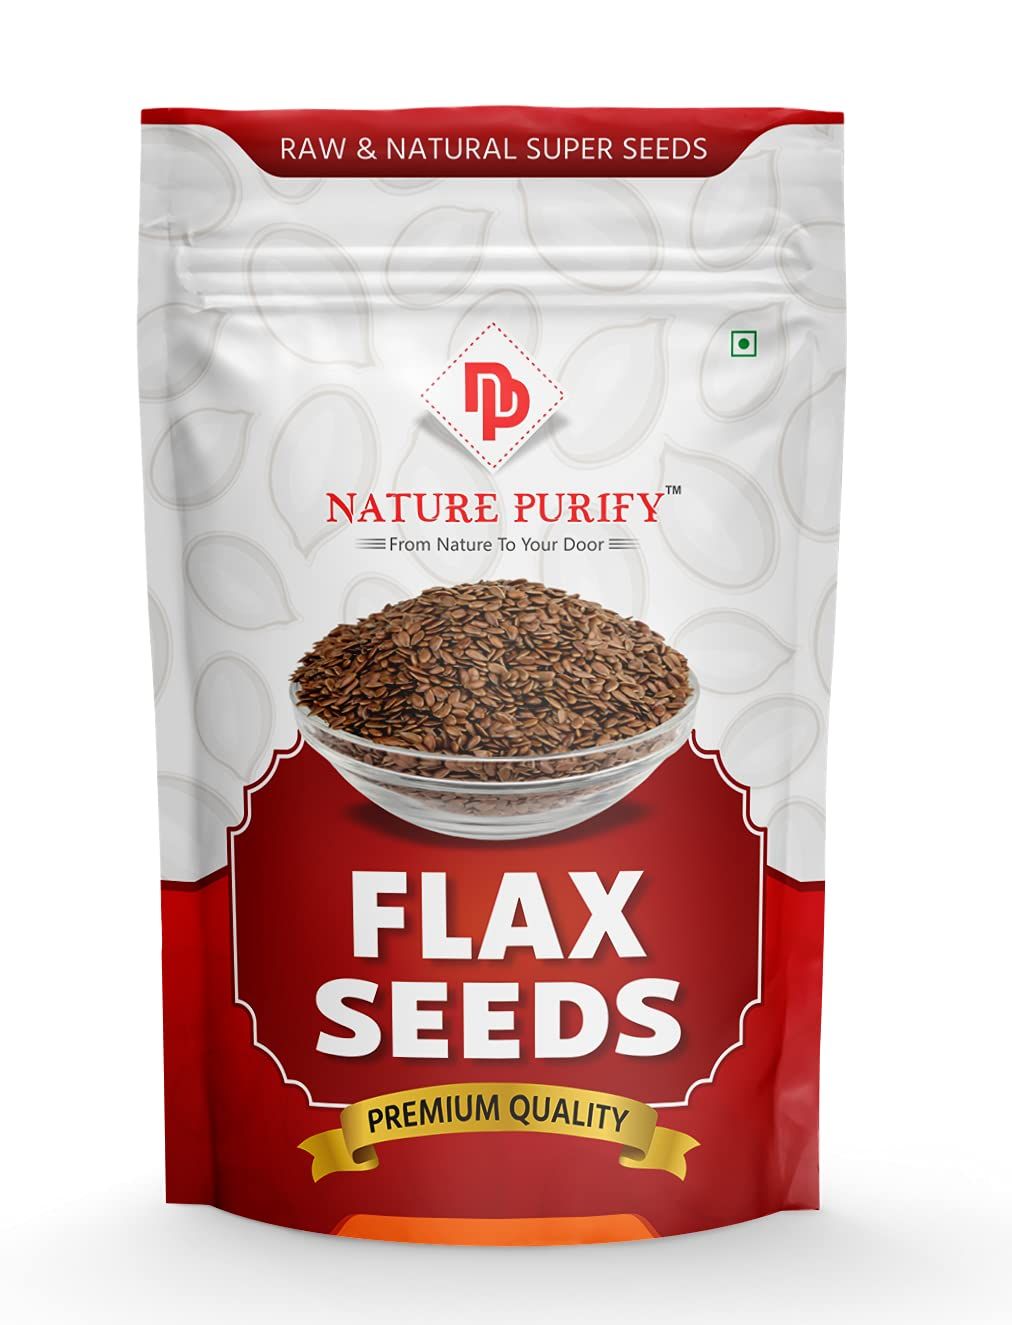 Nature Purify Flax Seeds Image